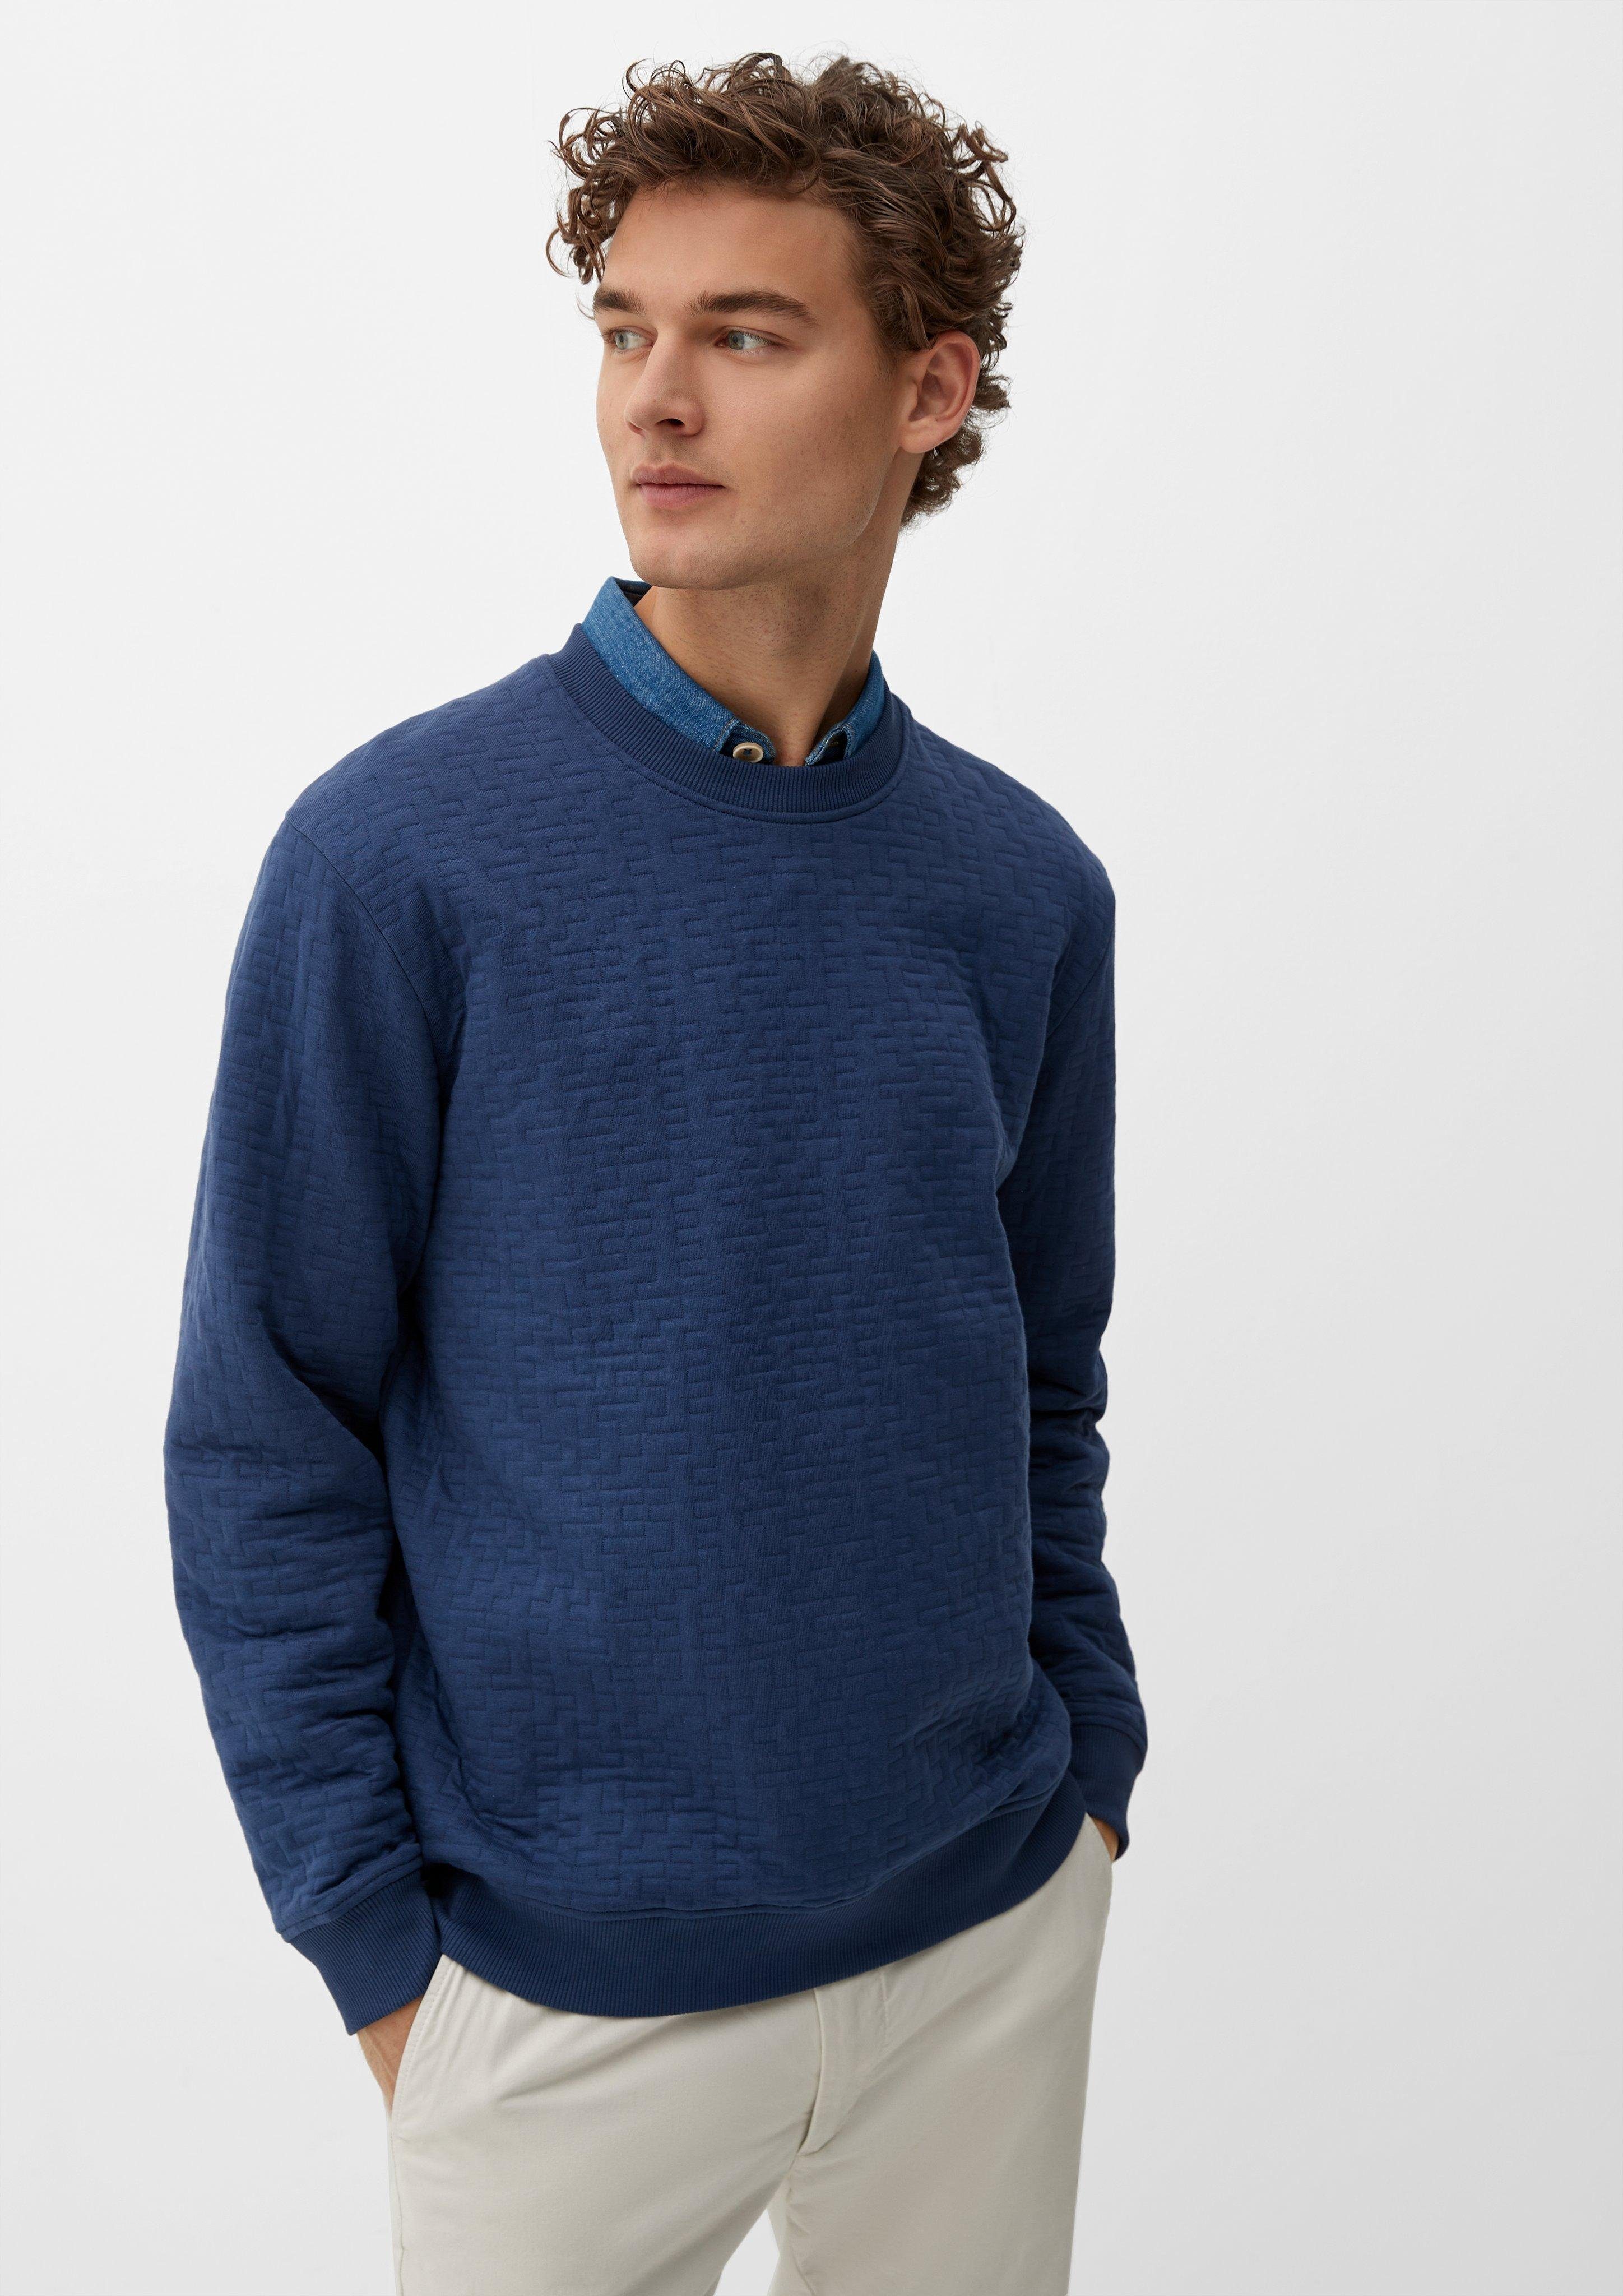 s.Oliver Sweatshirt Sweatshirt mit Musterstruktur tiefblau